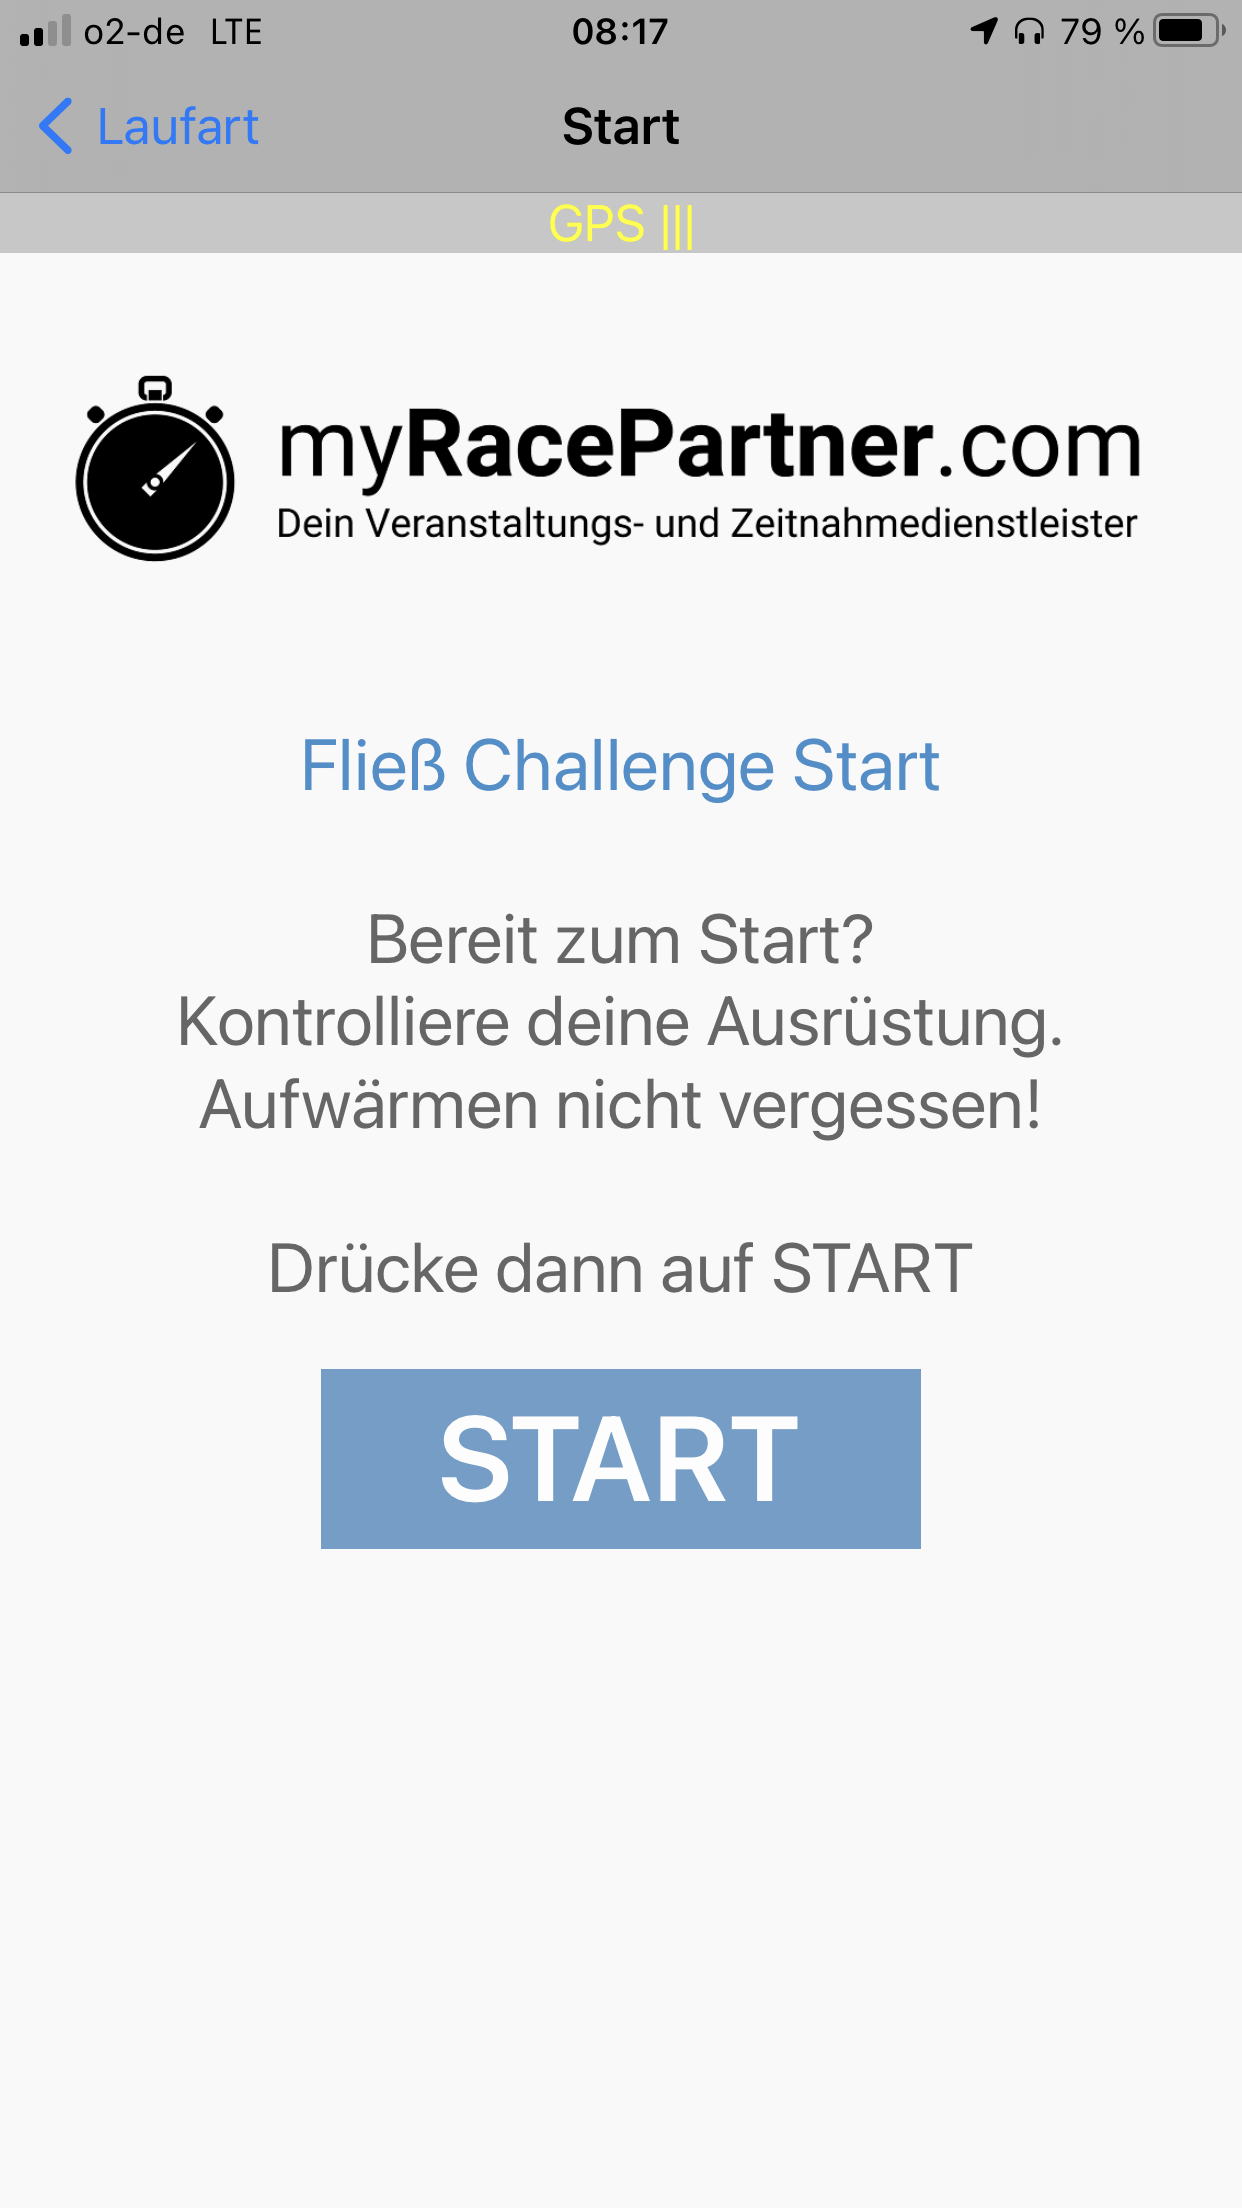 myRacePartner.com - Die App am Start 02